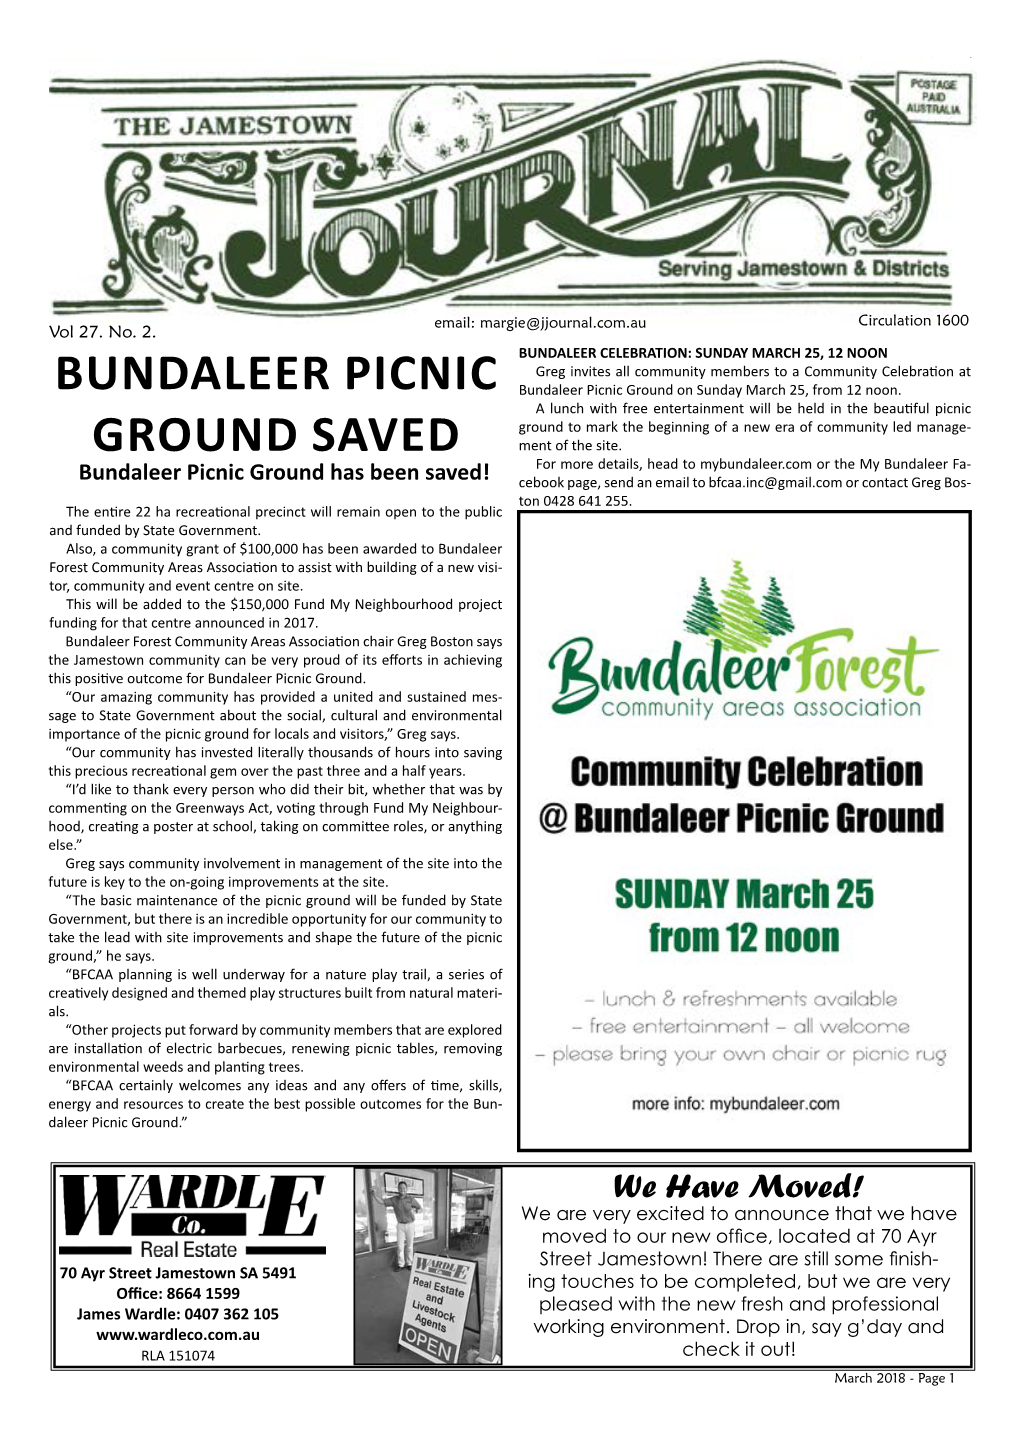 Bundaleer Picnic Ground Saved